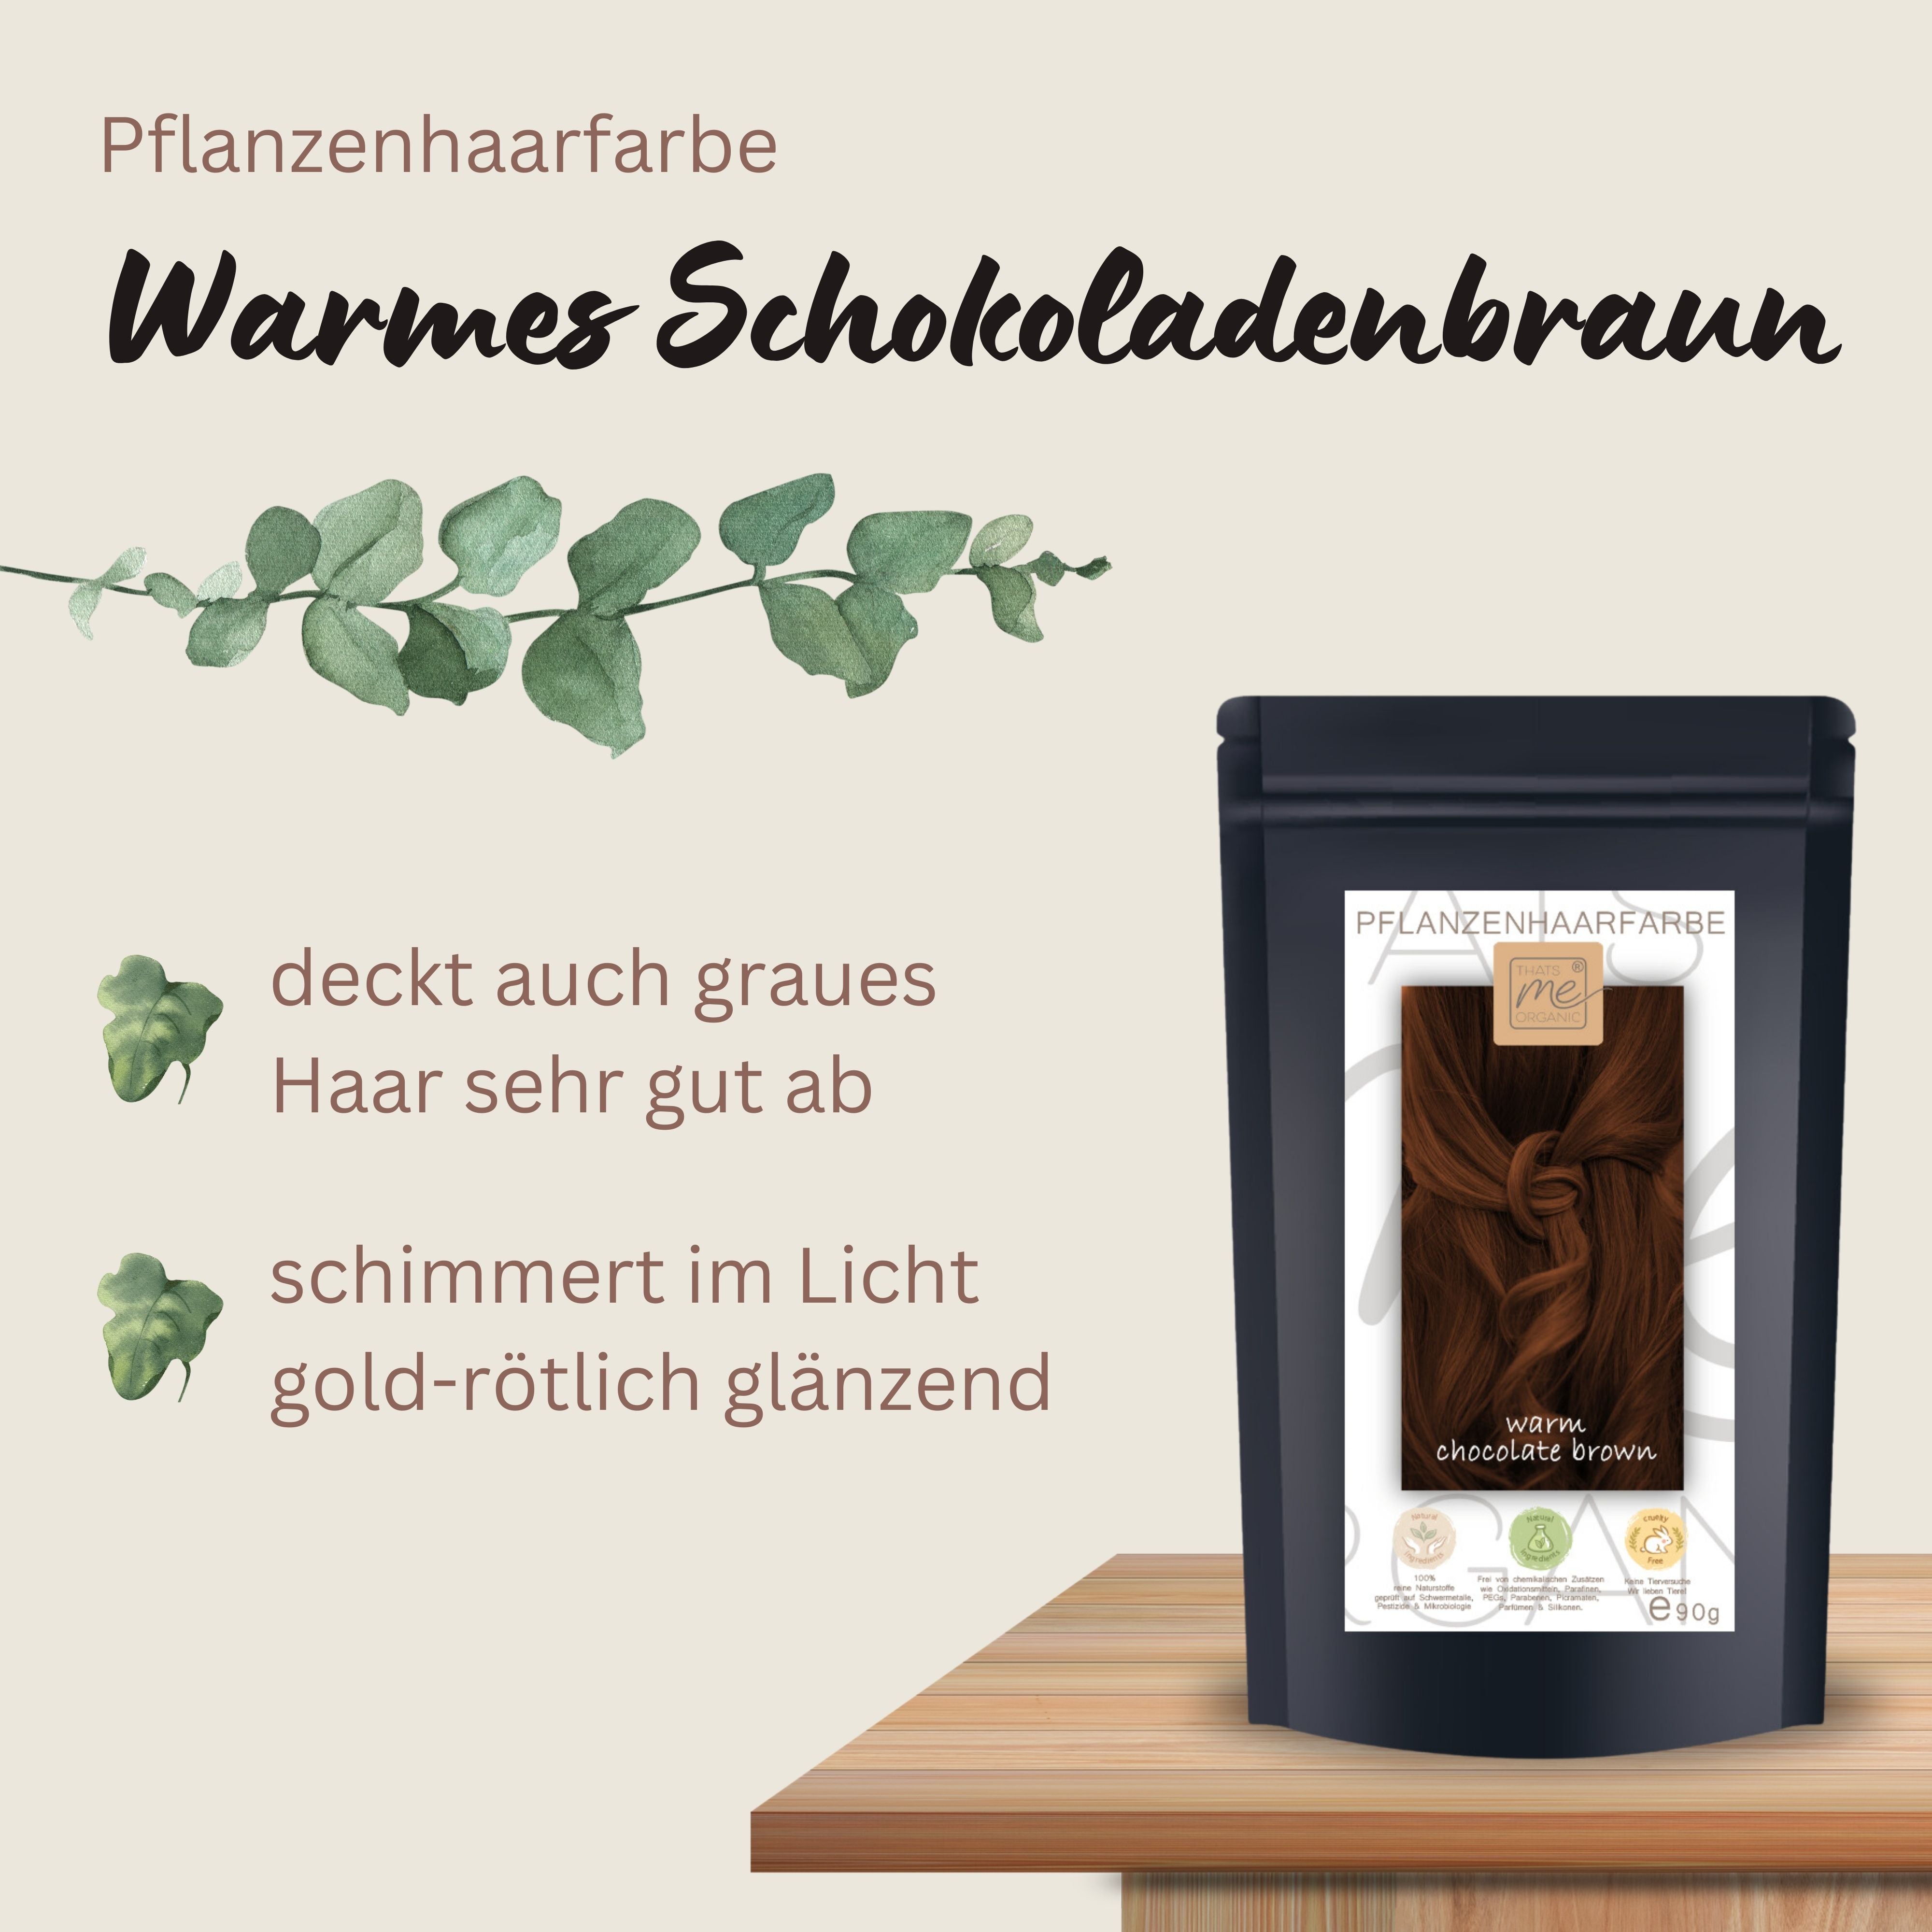 Profi-Pflanzenhaarfarbe SET warmes Schokoladen-Braun "warm chocolate brown"